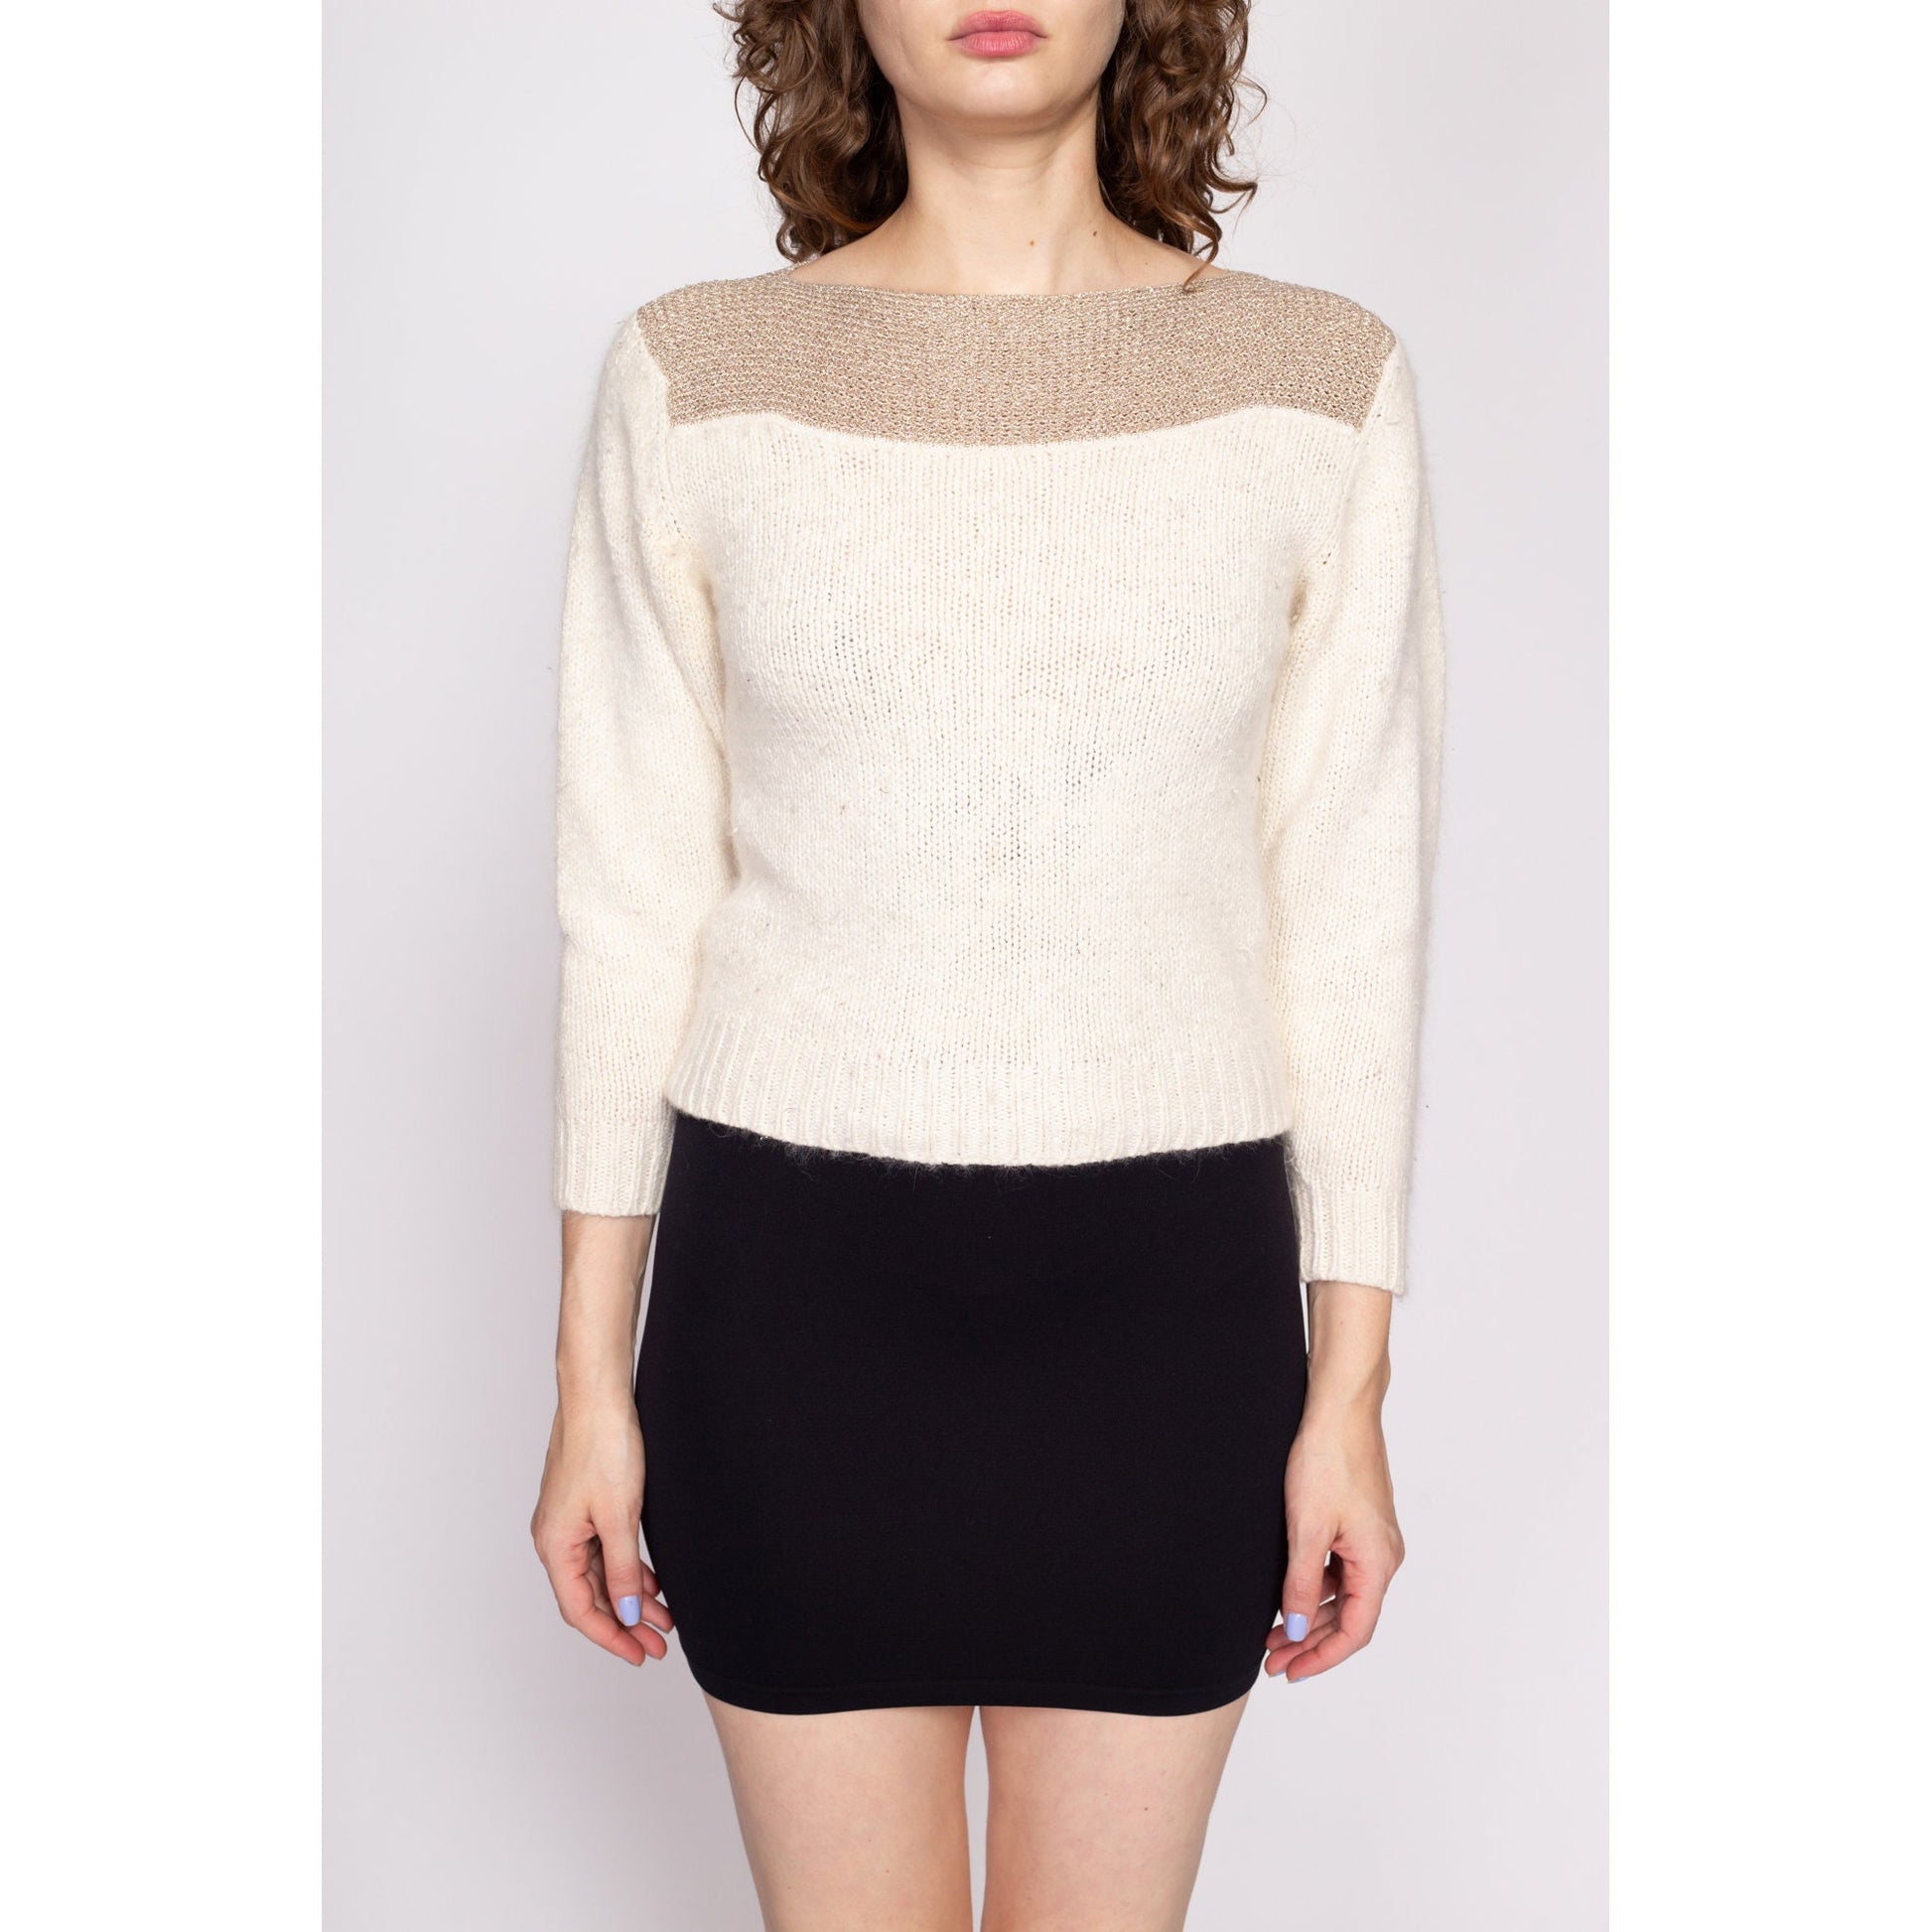 80s Cream & Gold Metallic Knit Sweater - Small to Medium | Vintage Silk Angora Long Sleeve Cropped Pullover